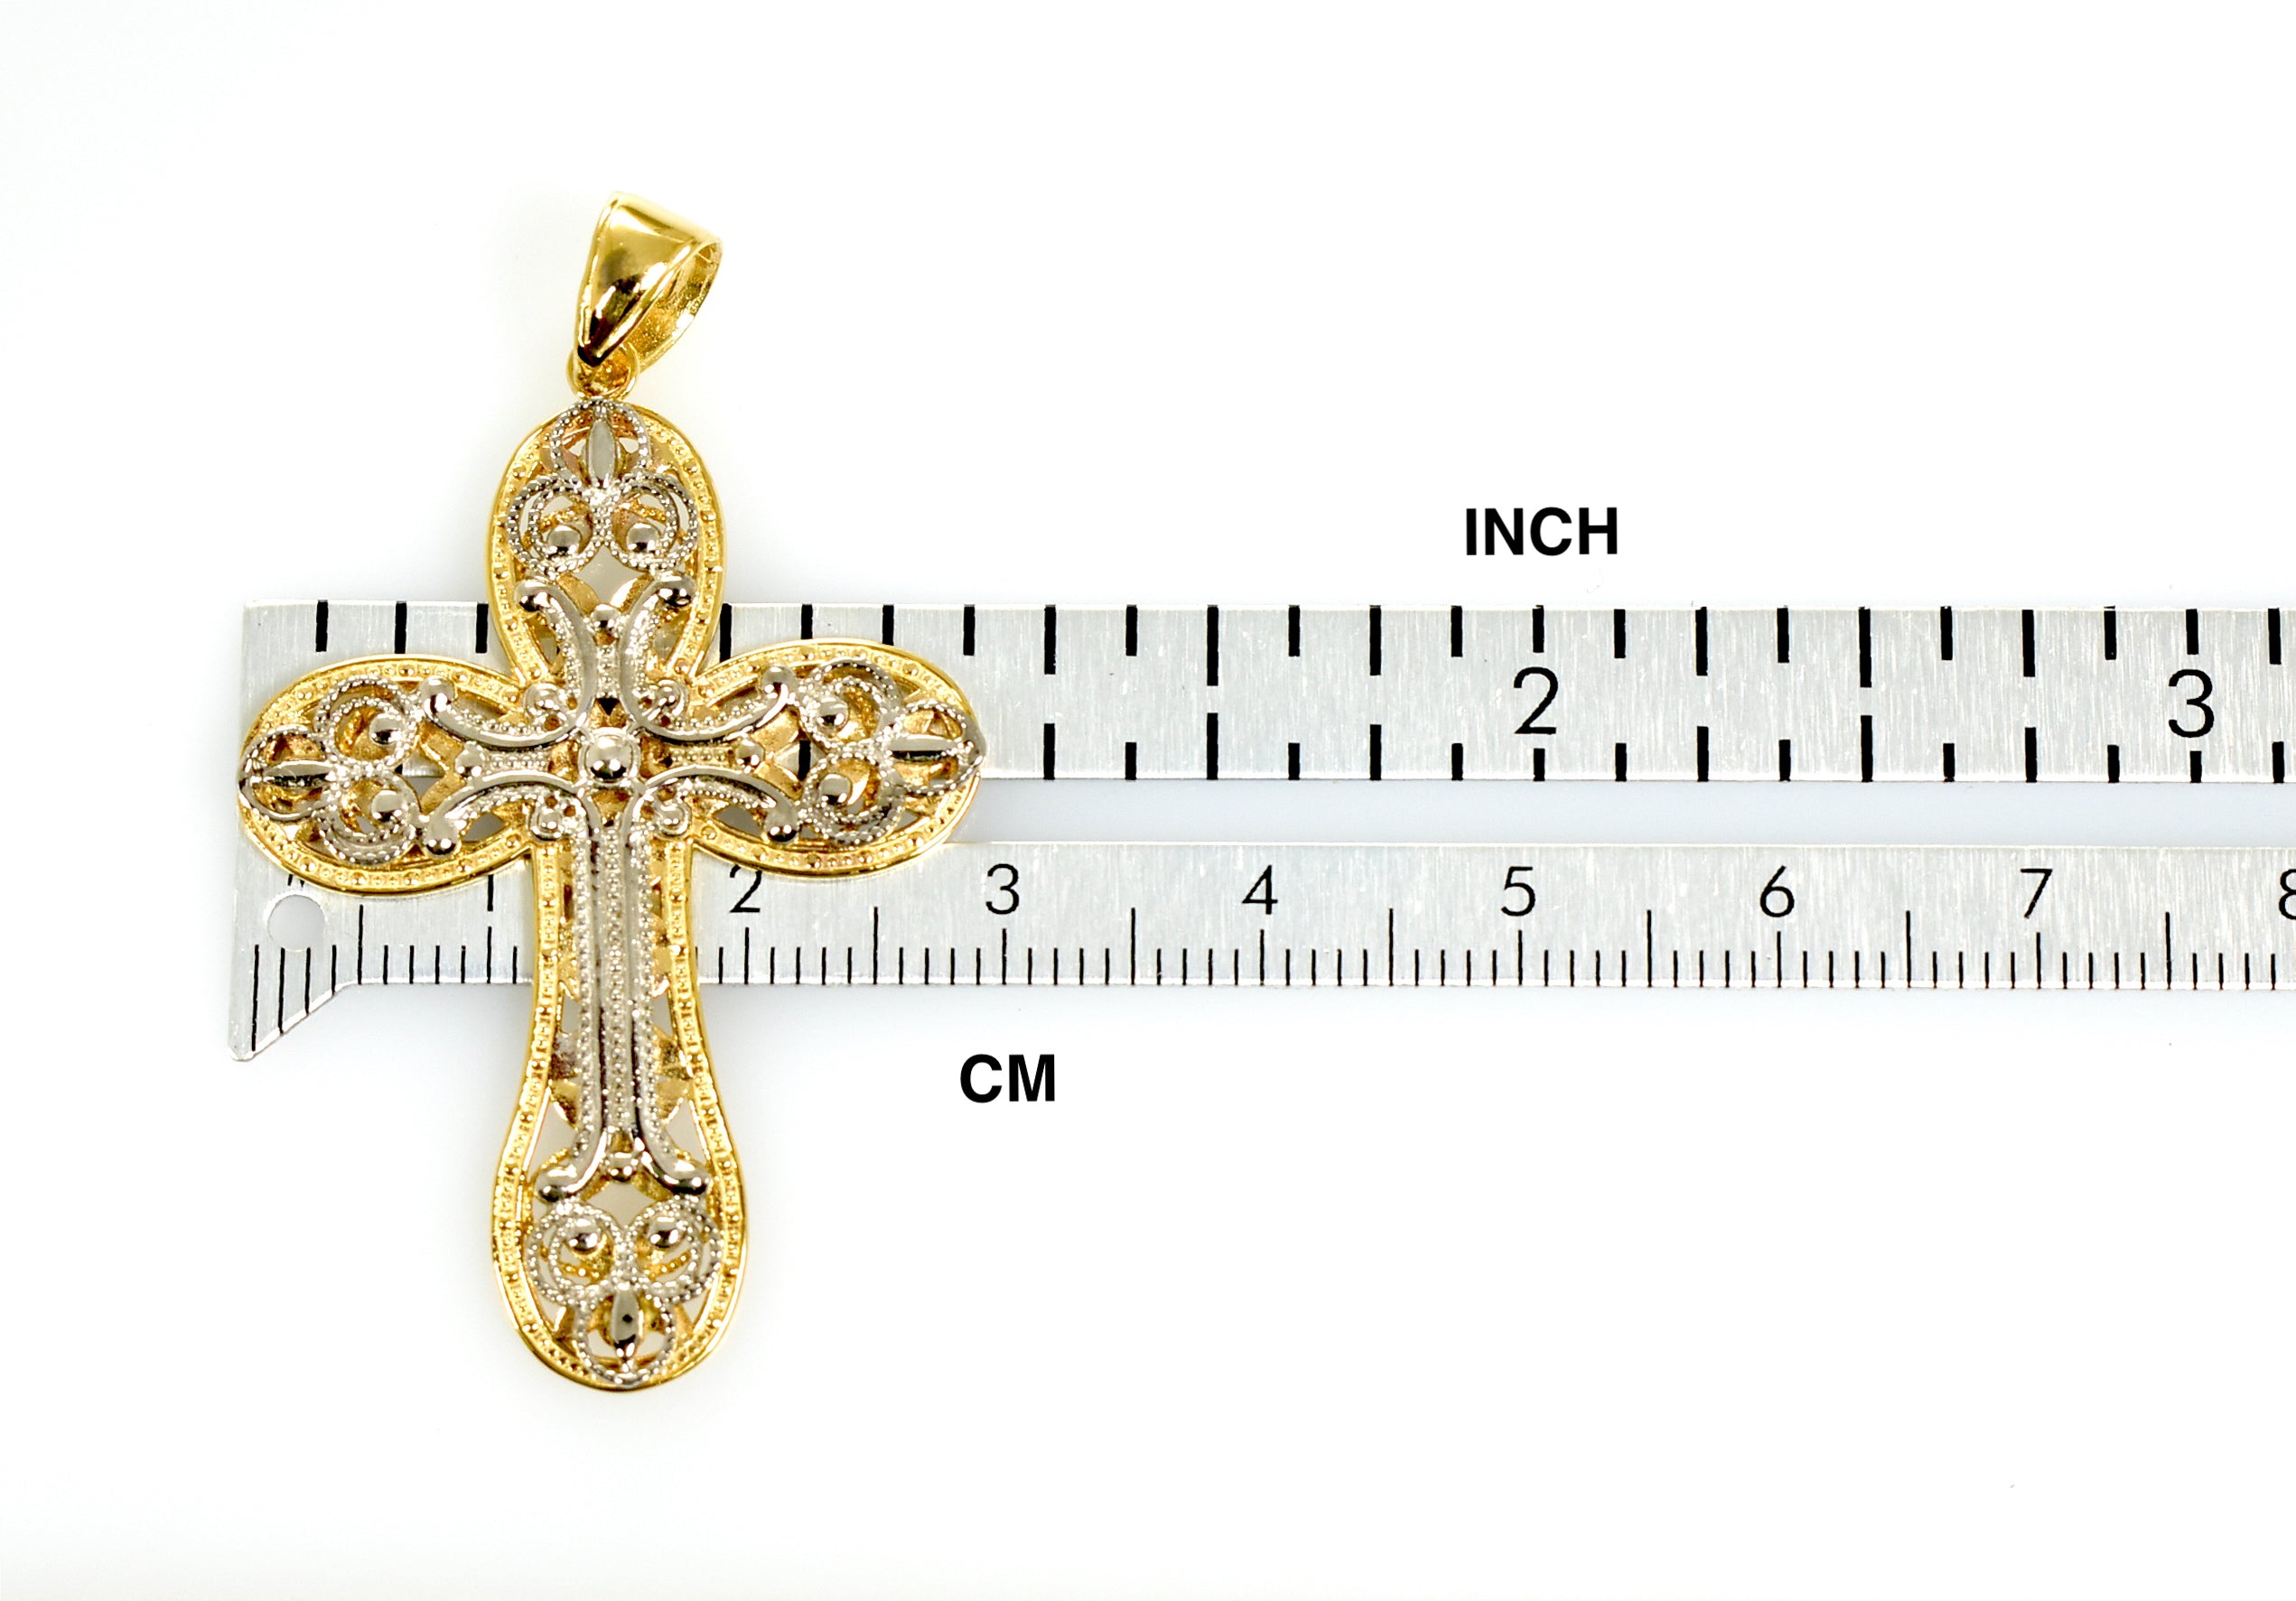 14k Gold Two Tone Large Fancy Latin Cross Pendant Charm